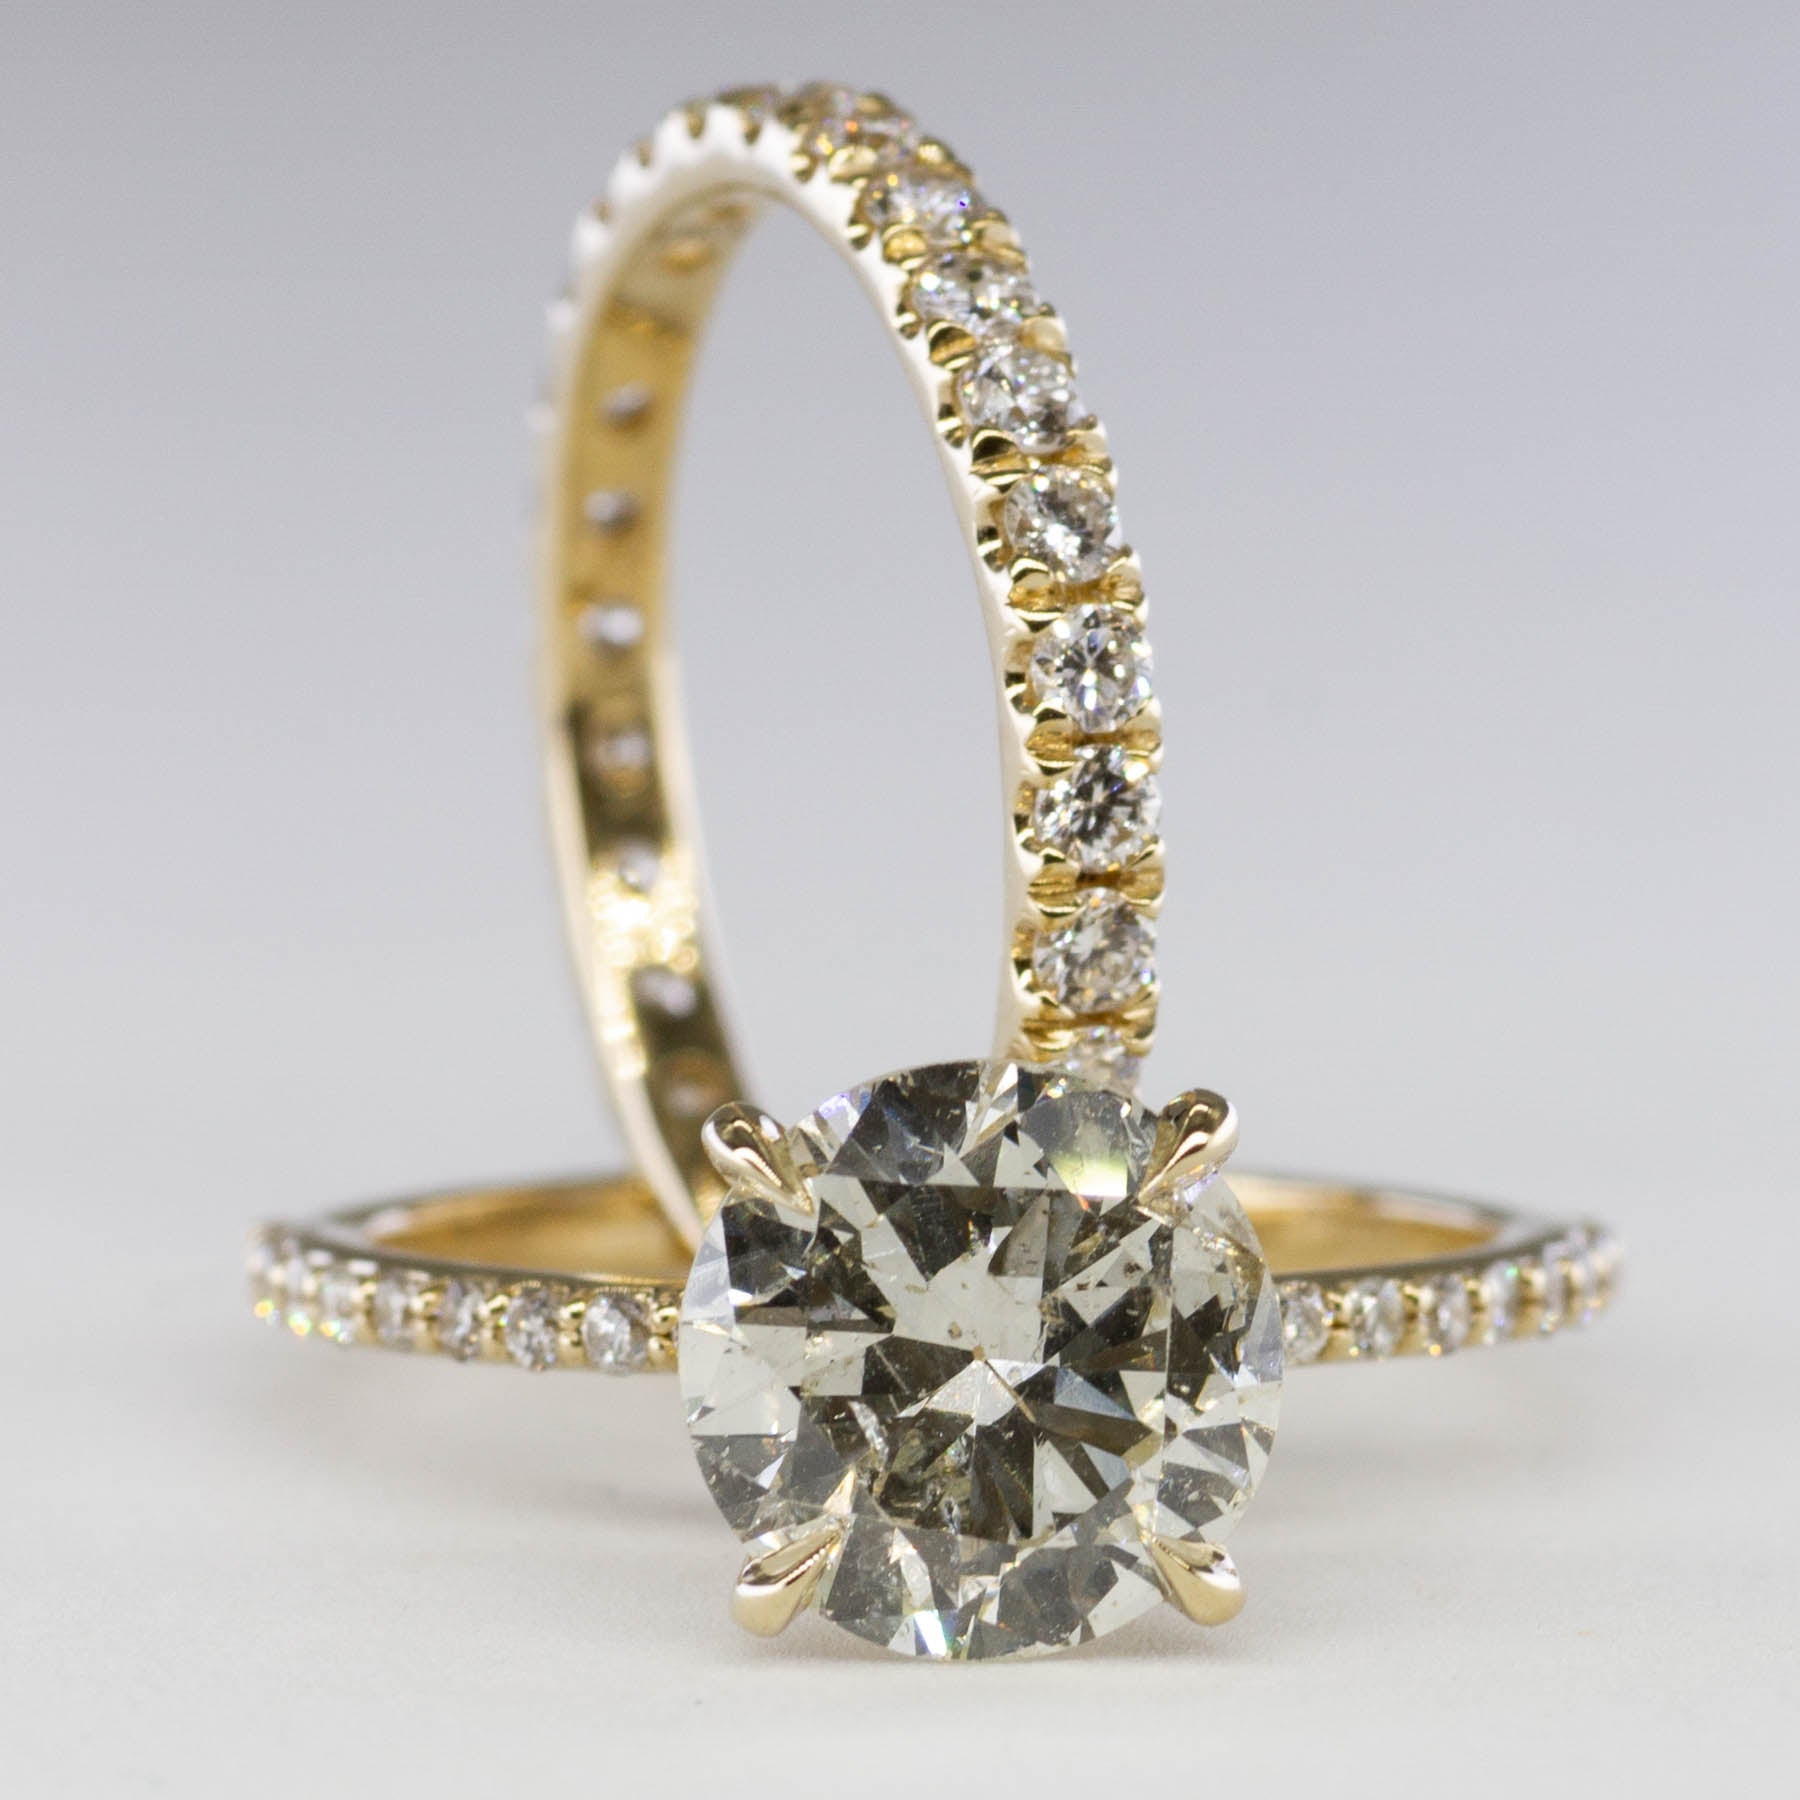 '100 Ways' Accented Diamond Ring | 2.81ctw | SZ 7.5 | - 100 Ways